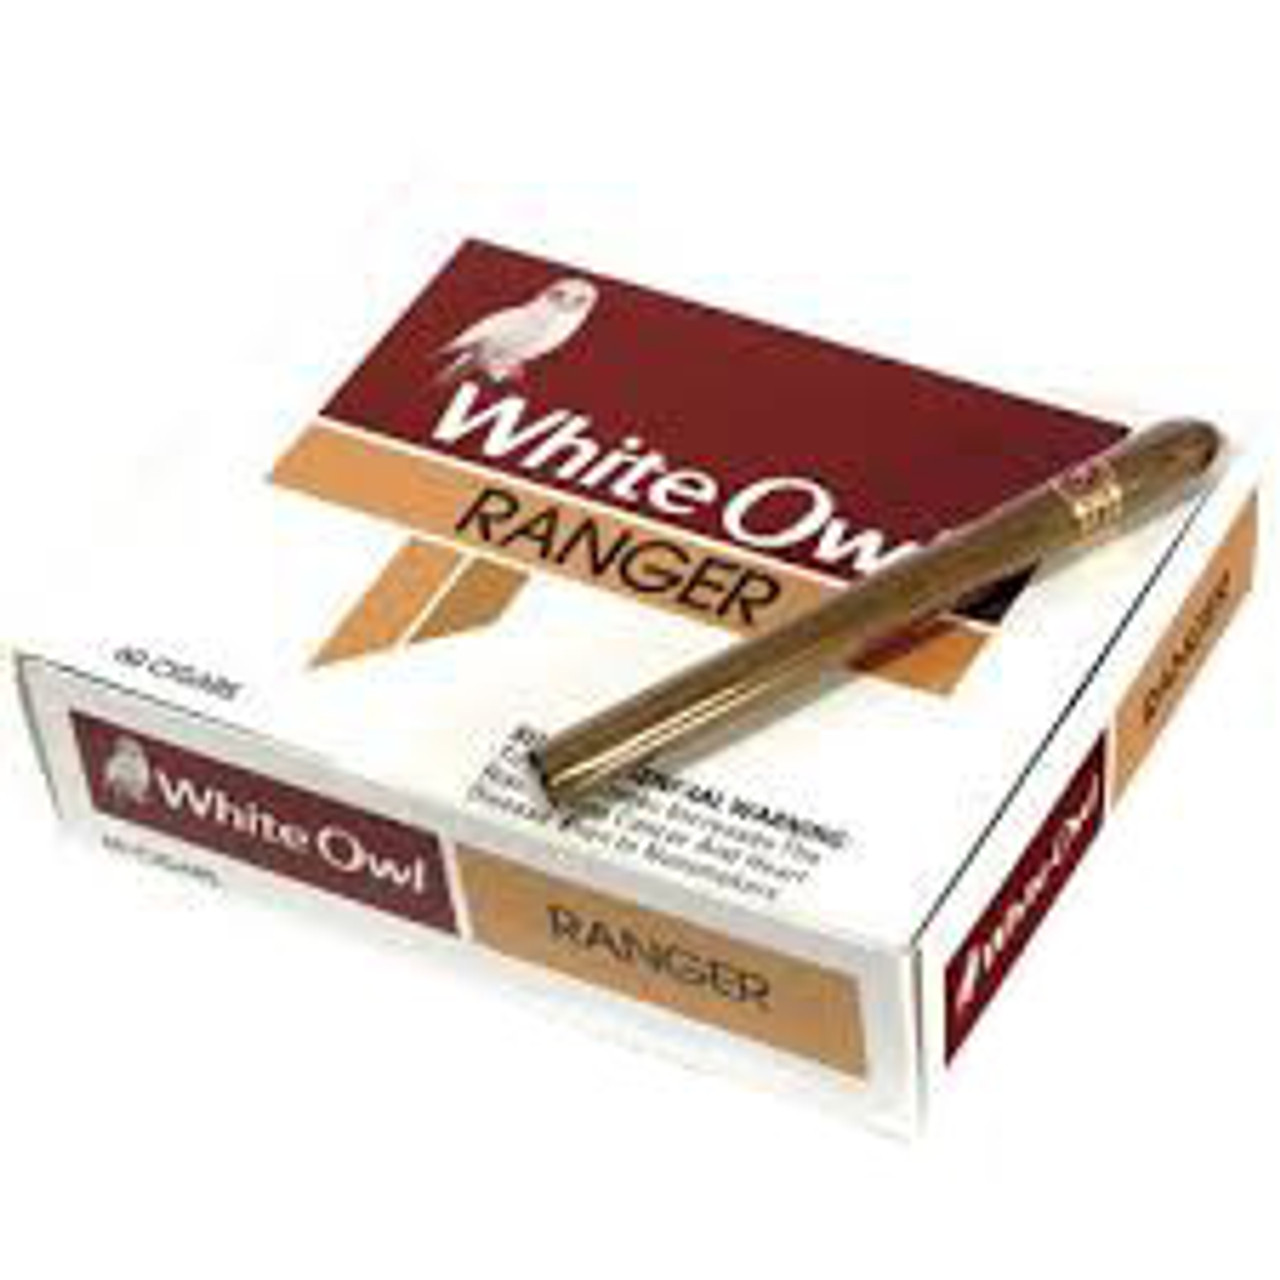 White Owl Ranger Cigars - 5.5 x 34 (Box of 60) *Box